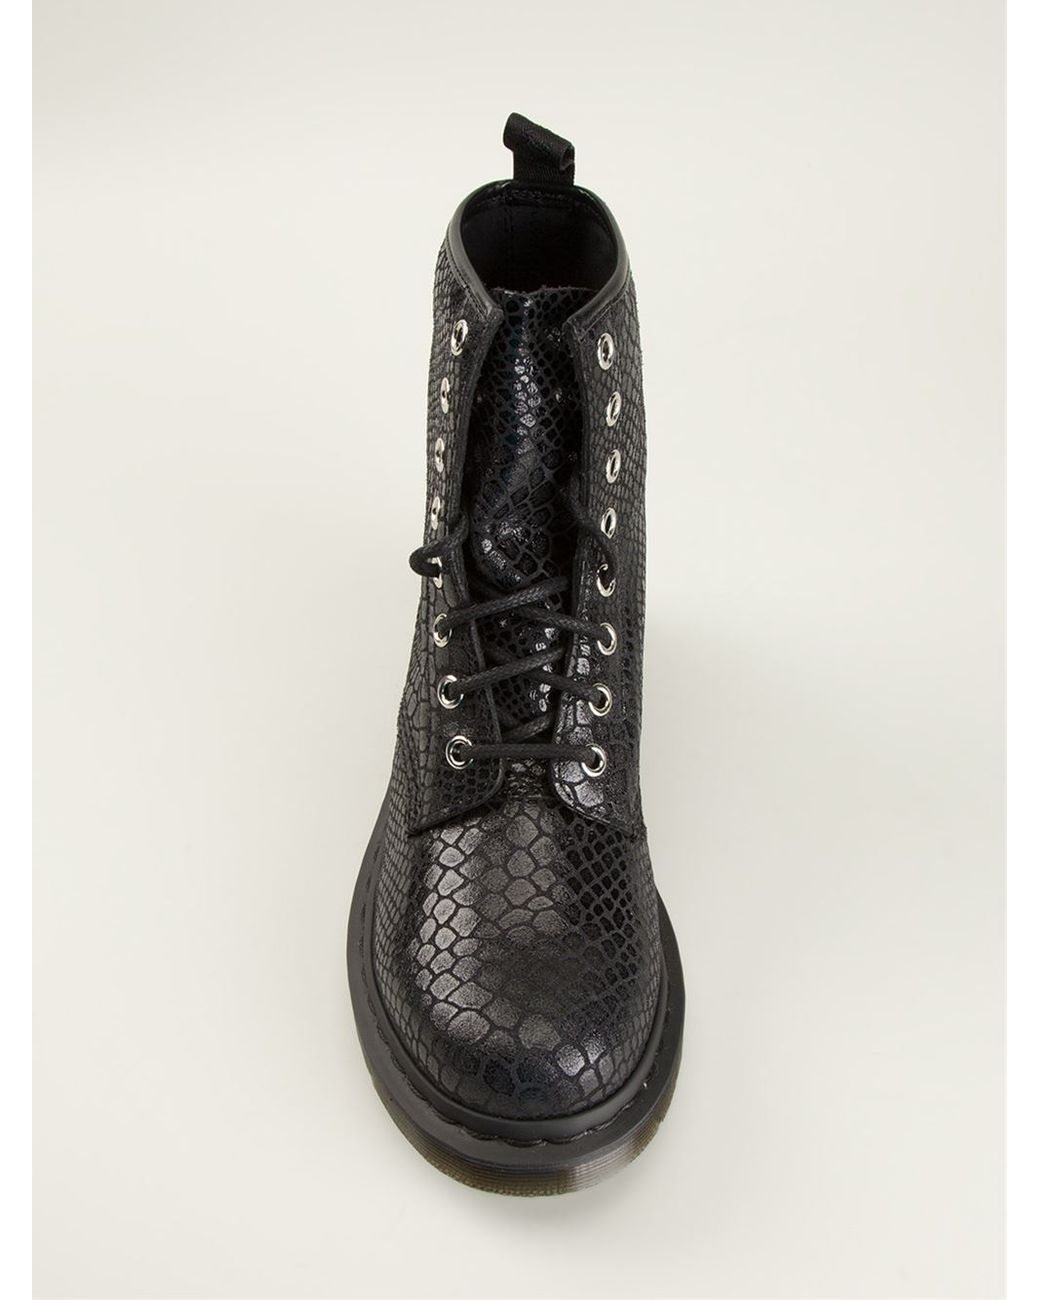 Dr. Martens '1460' Snakeskin Effect Boots in Black | Lyst